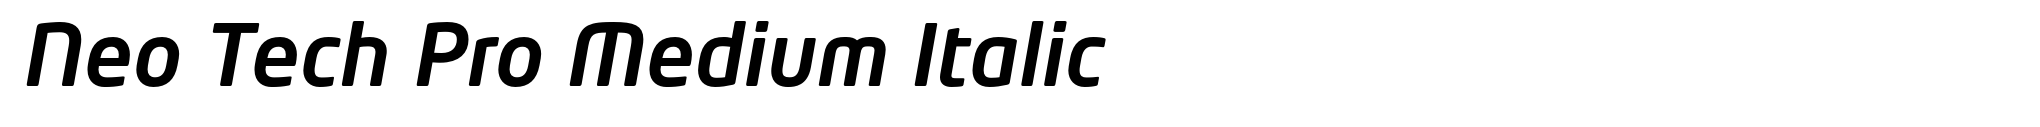 Neo Tech Pro Medium Italic image